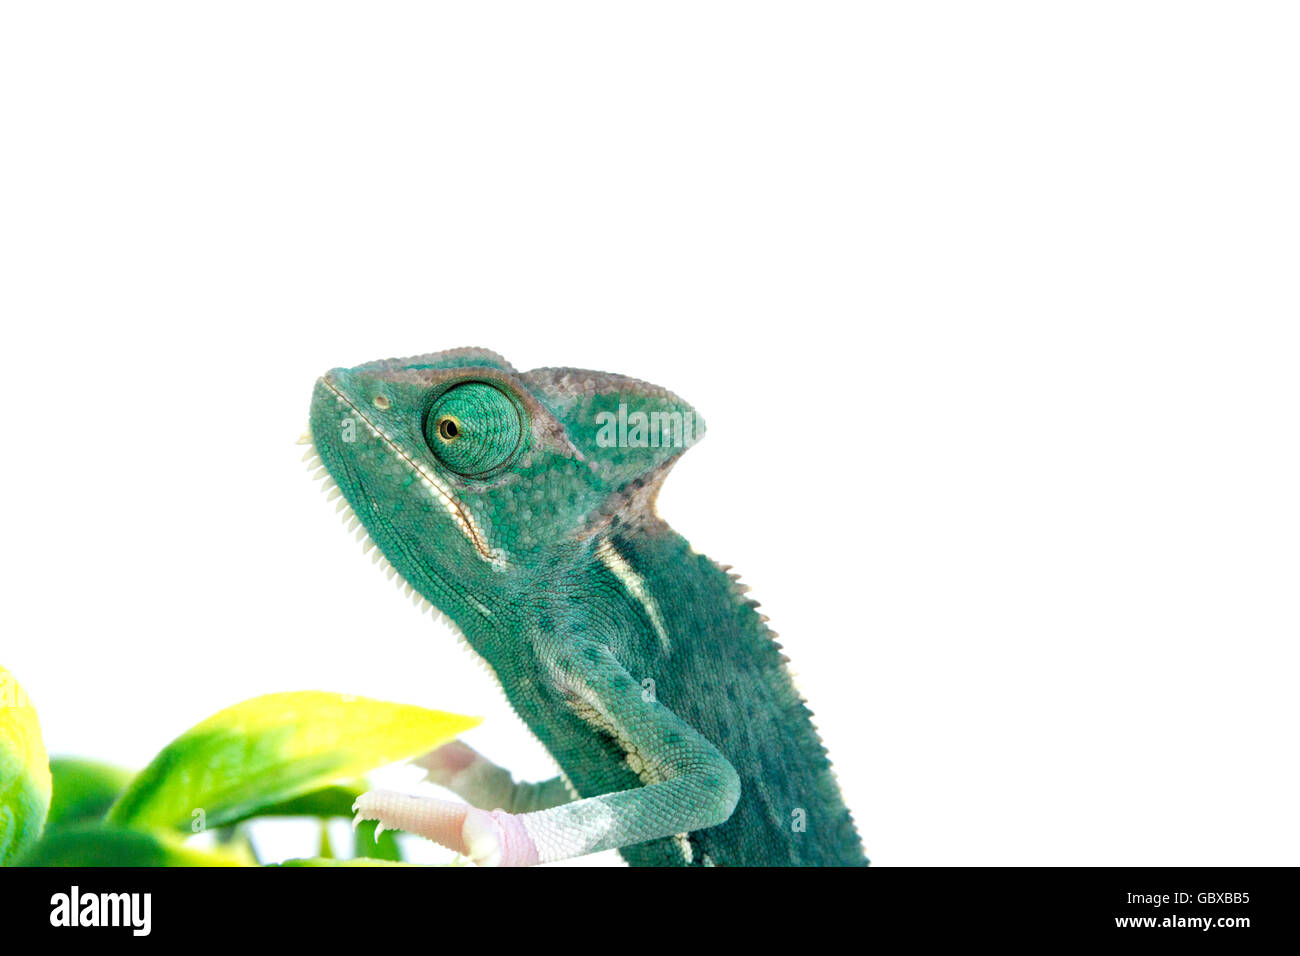 Young Veiled chameleon / Cone-head chameleon /  Yemen chameleon (Chamaeleo calyptratus) on a branch Stock Photo